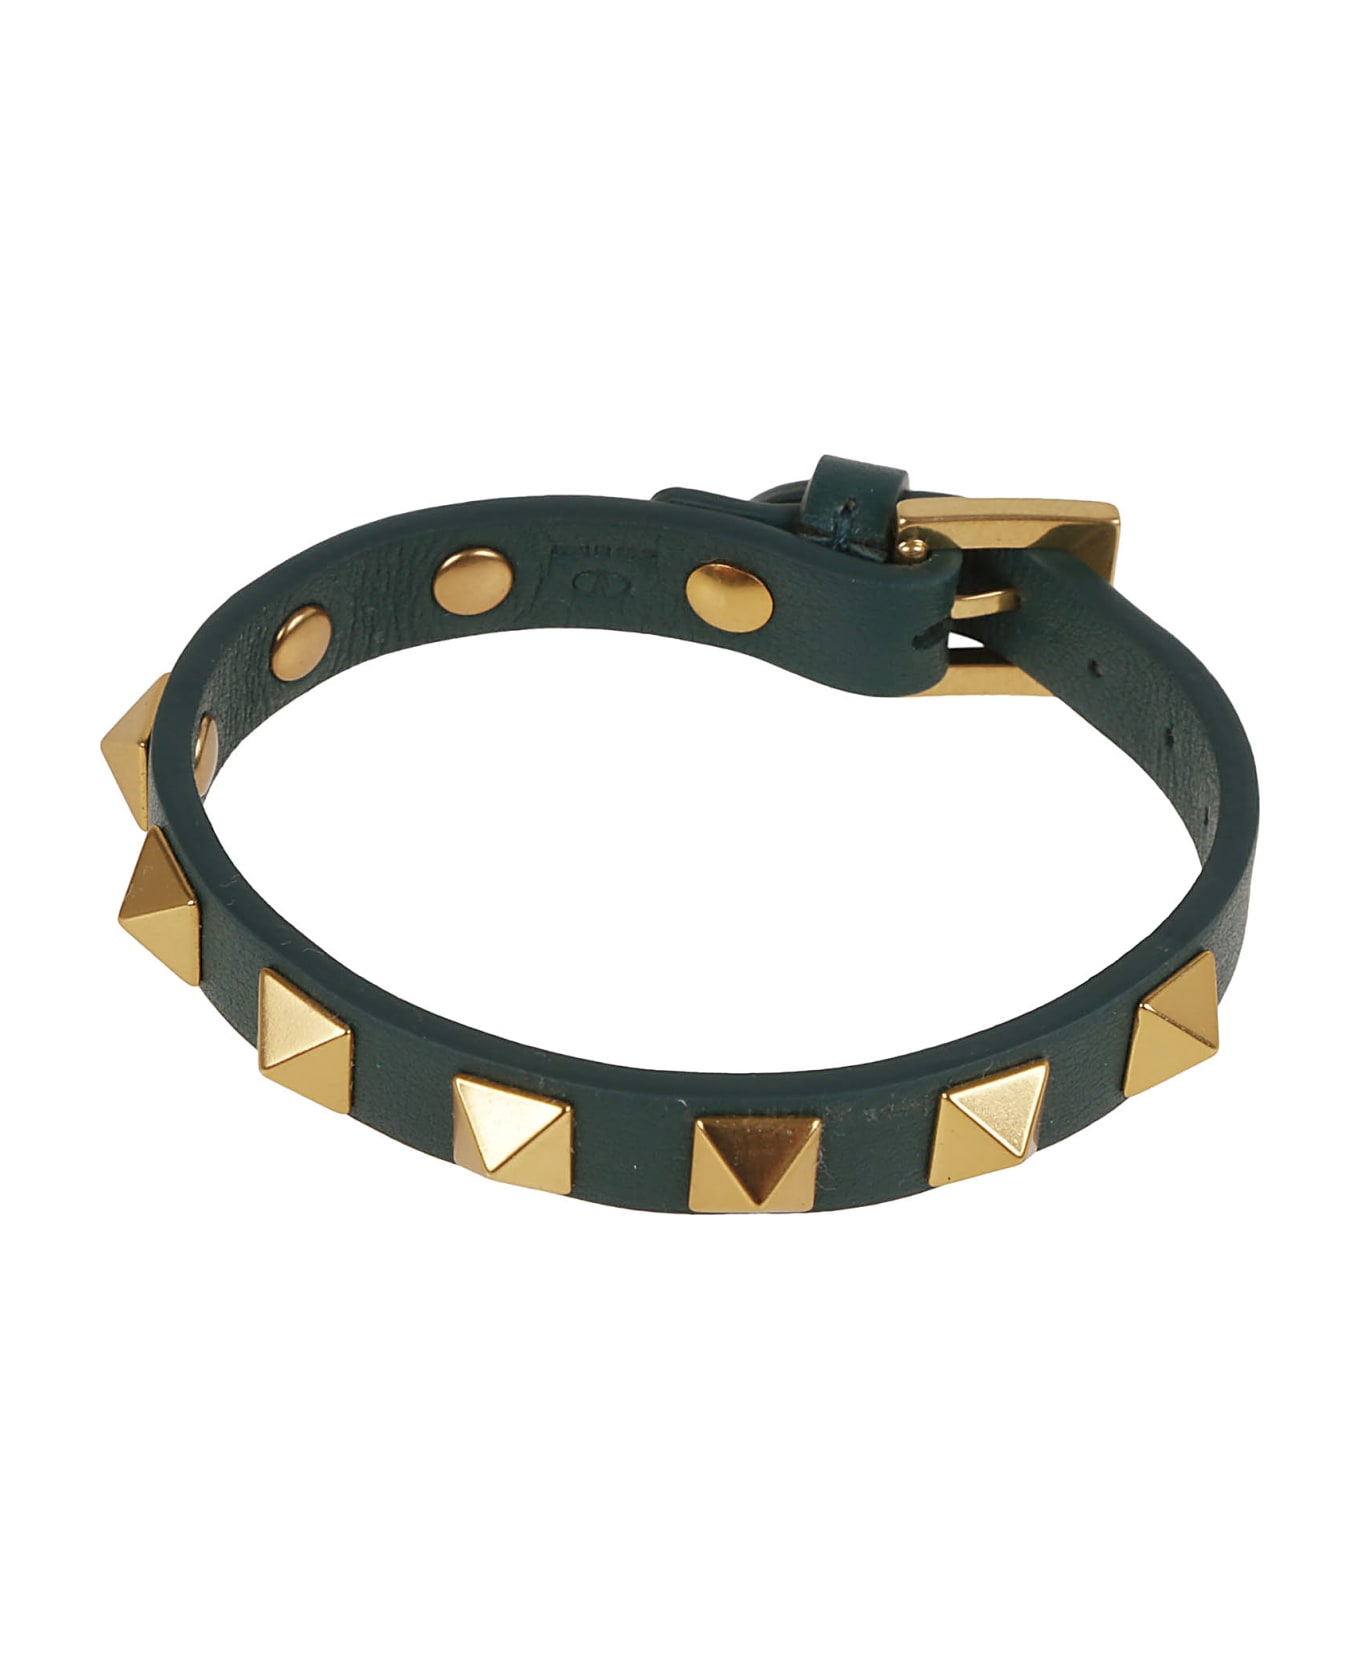 Valentino Garavani Leather Studded Bracelet (8x8mm) - Uvw Verde College